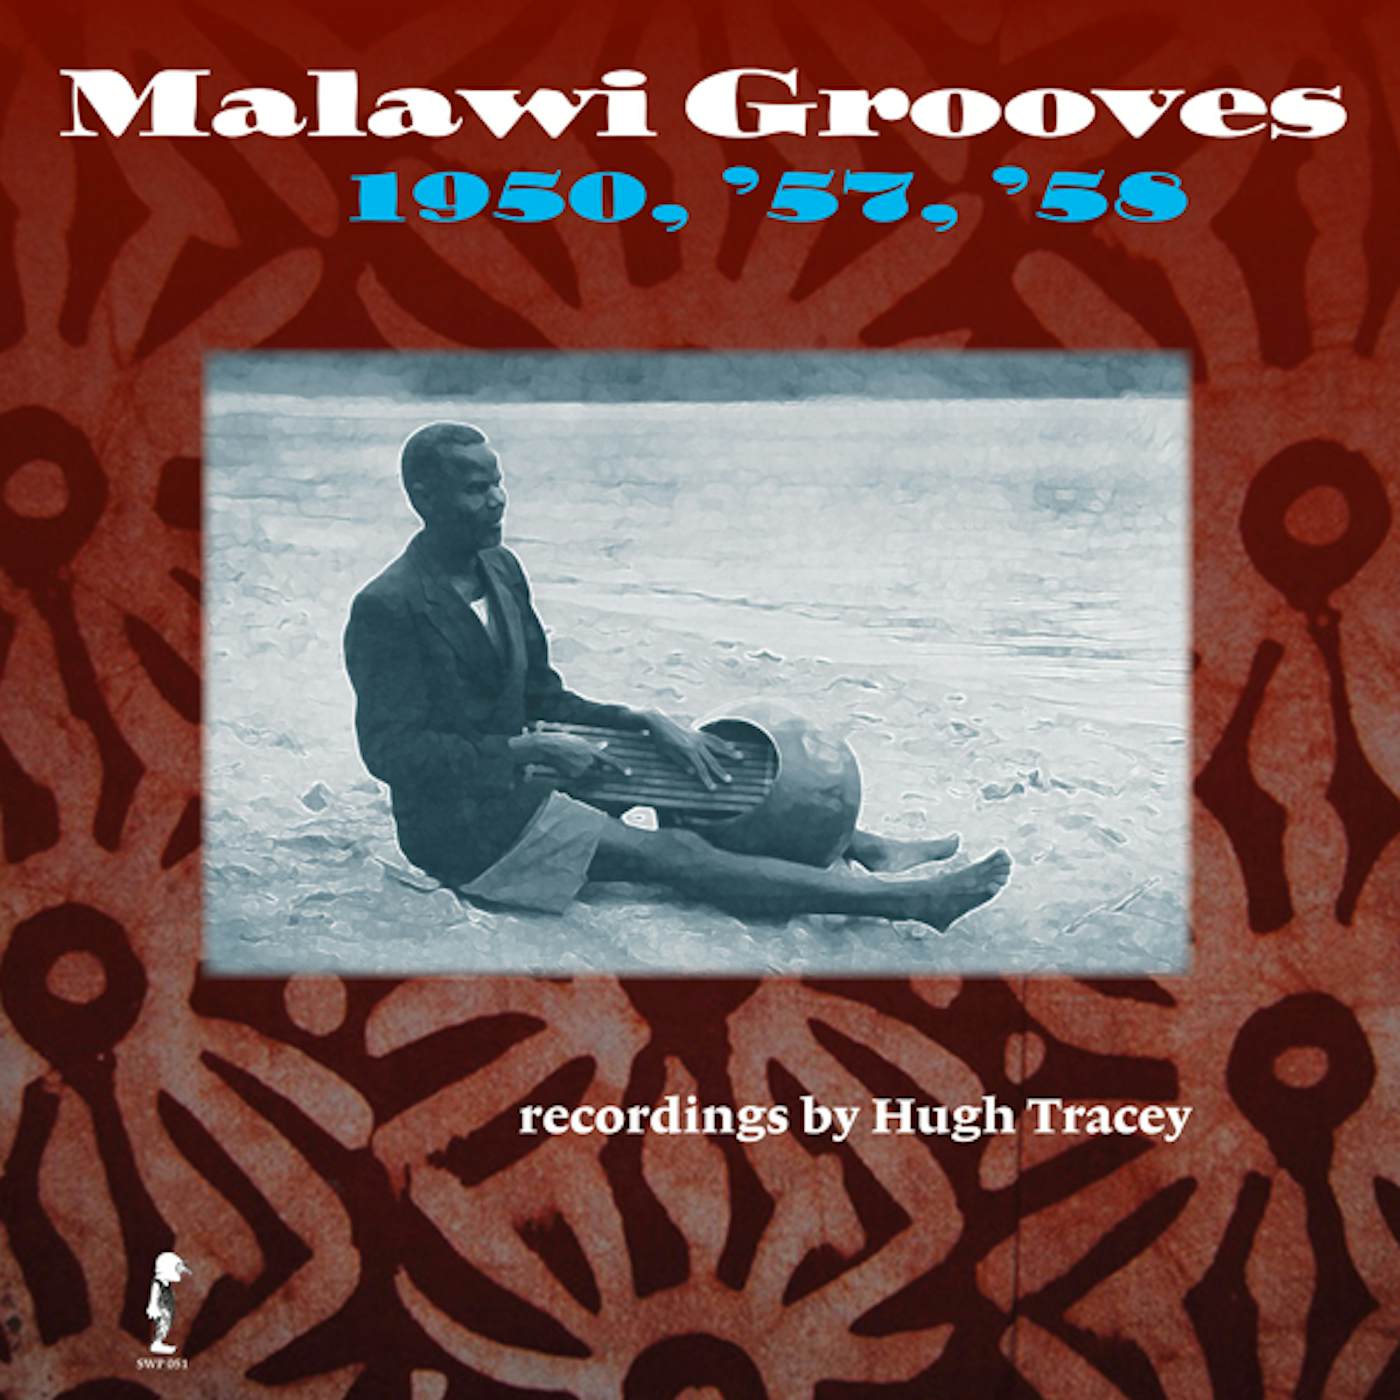 Hugh Tracey MALAWI GROOVES 1950 '57 '58 Vinyl Record